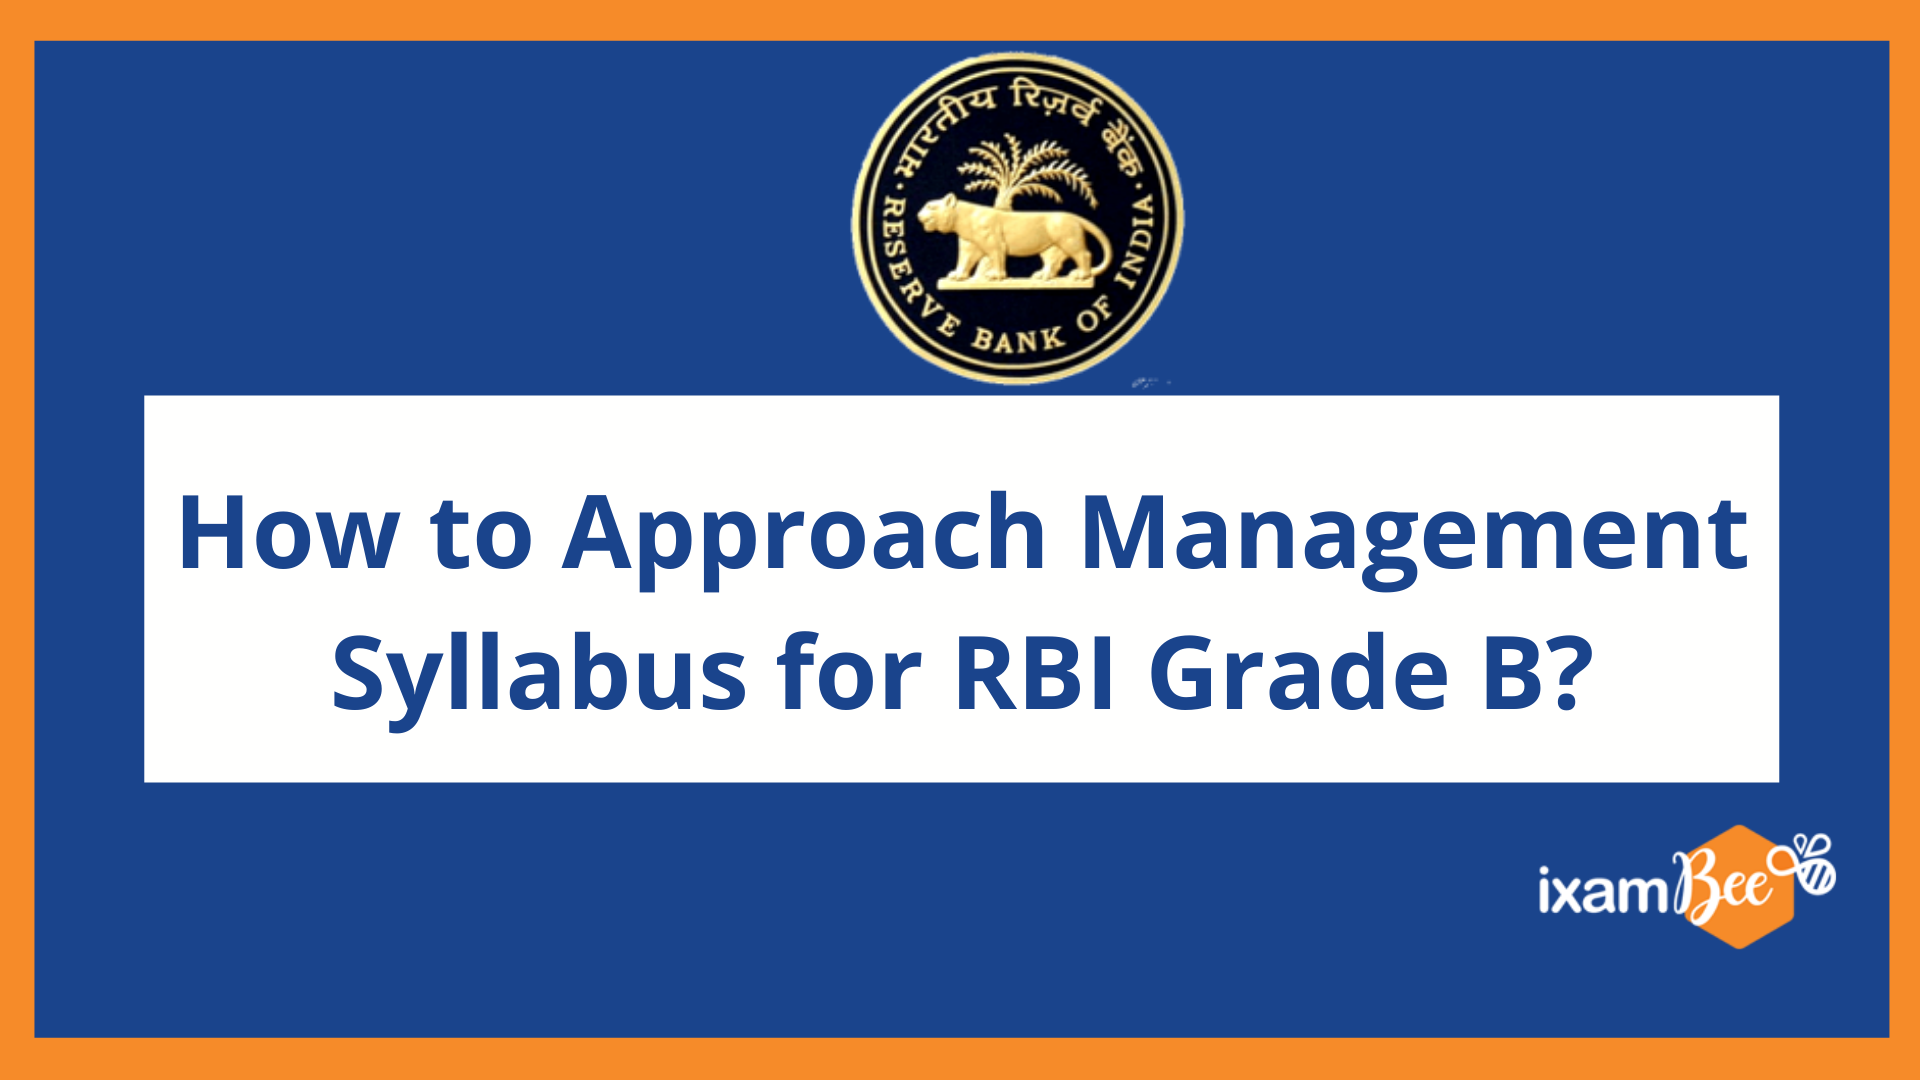 How to Prepare Management for RBI Grade B?